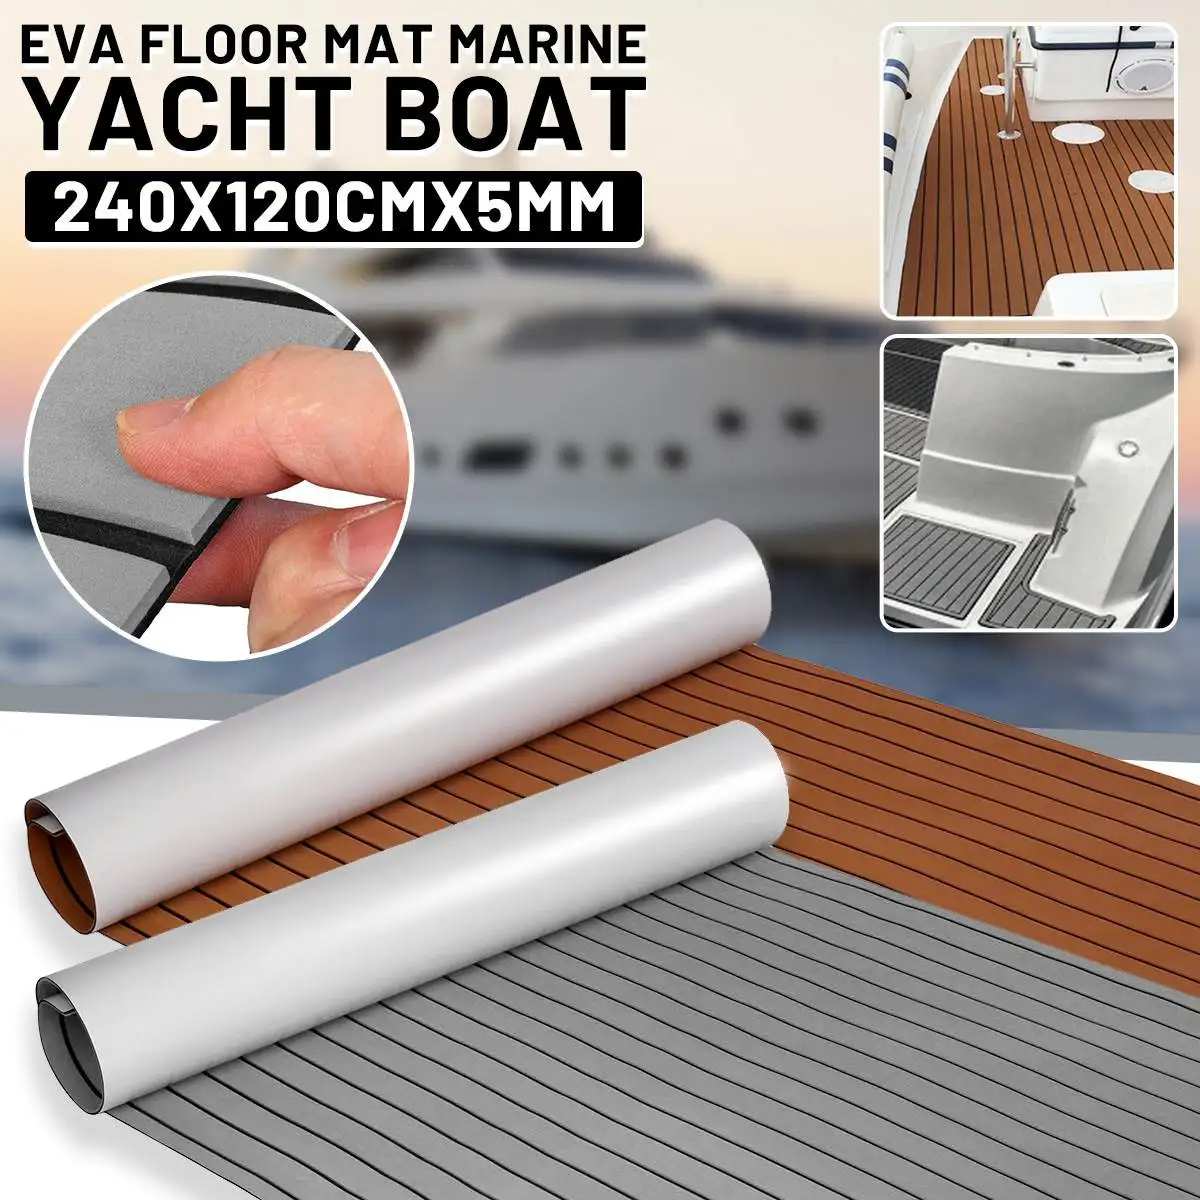 2400x1200x5mm Self-Adhesive EVA Foam Boat Marine Flooring Faux Teak Decking Sheet Striped Yacht Mat Brown Gray